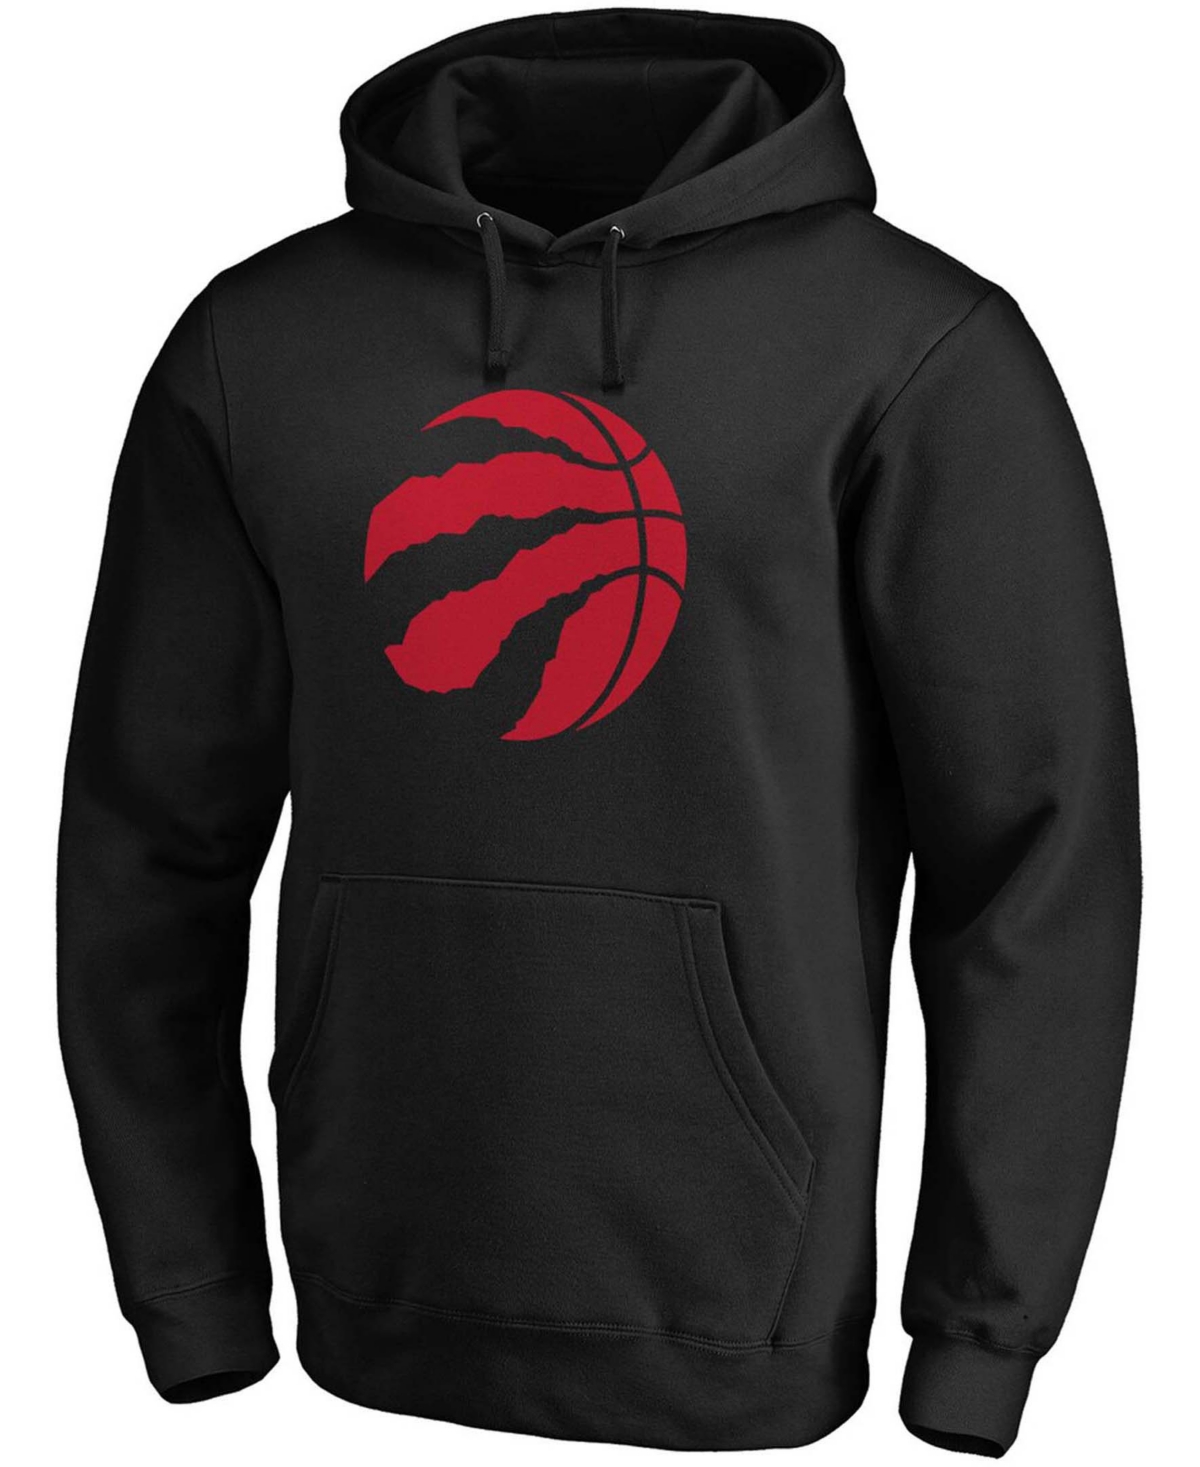 Shop Fanatics Men's Black Toronto Raptors Primary Team Logo Pullover Hoodie